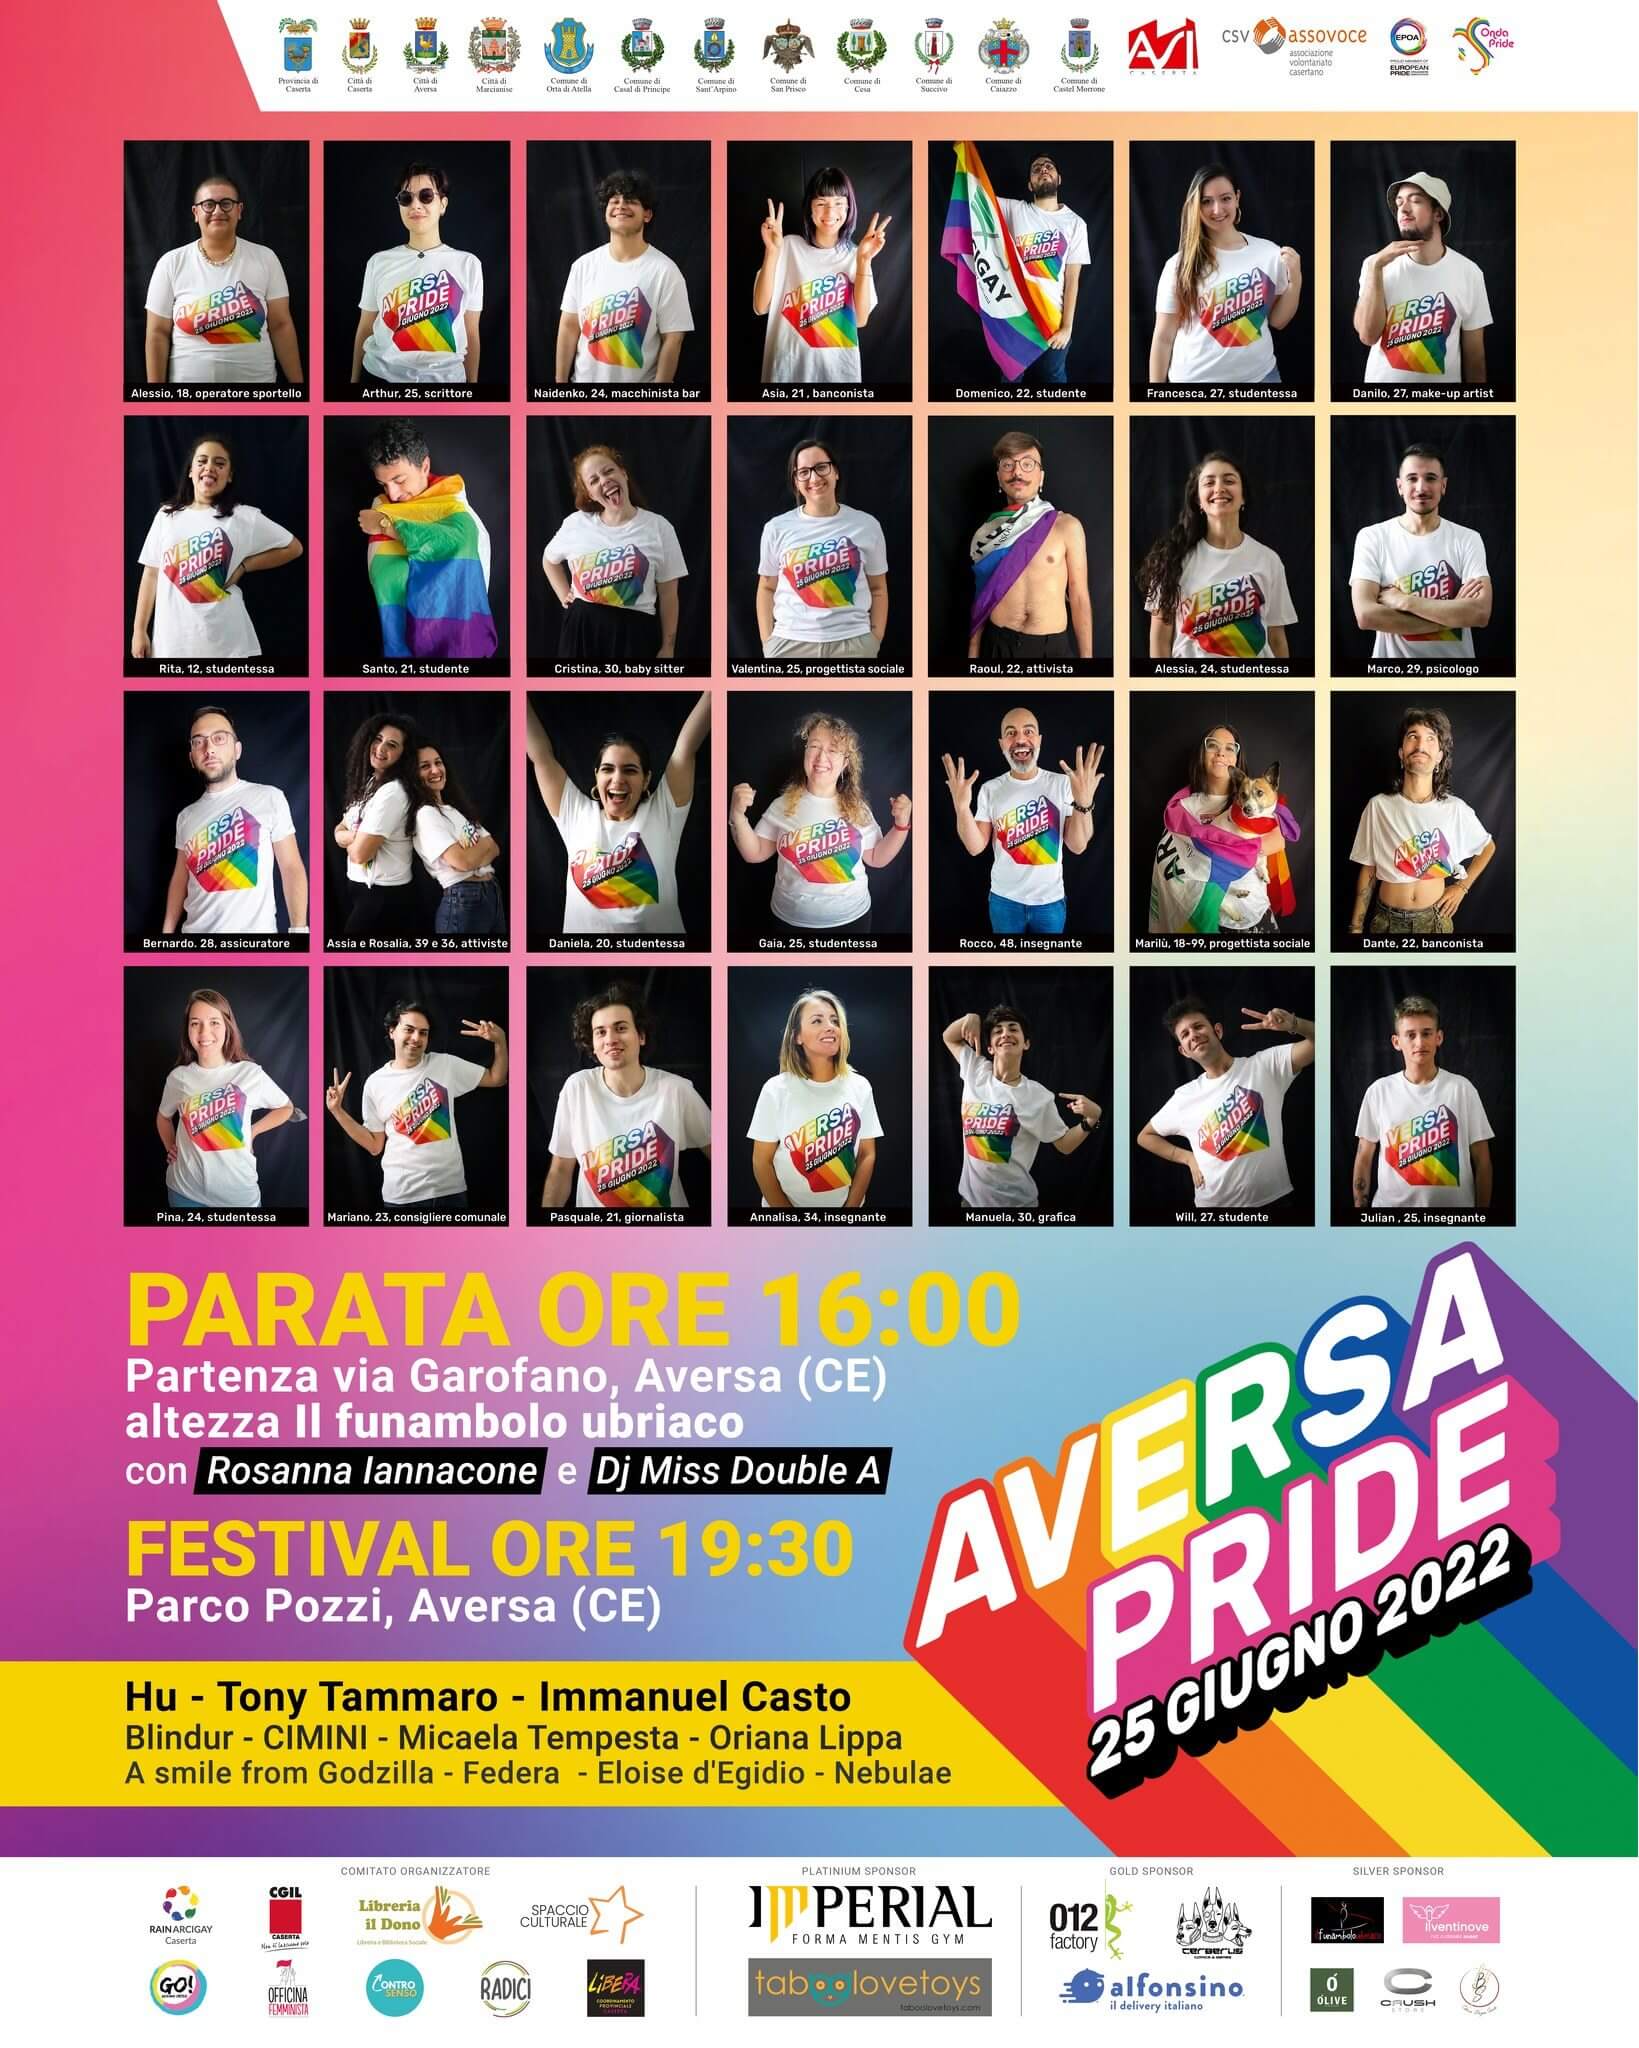 Aversa Pride 2022 sabato 25 giugno - Aversa Pride 2022 sabato 25 giugno - Gay.it